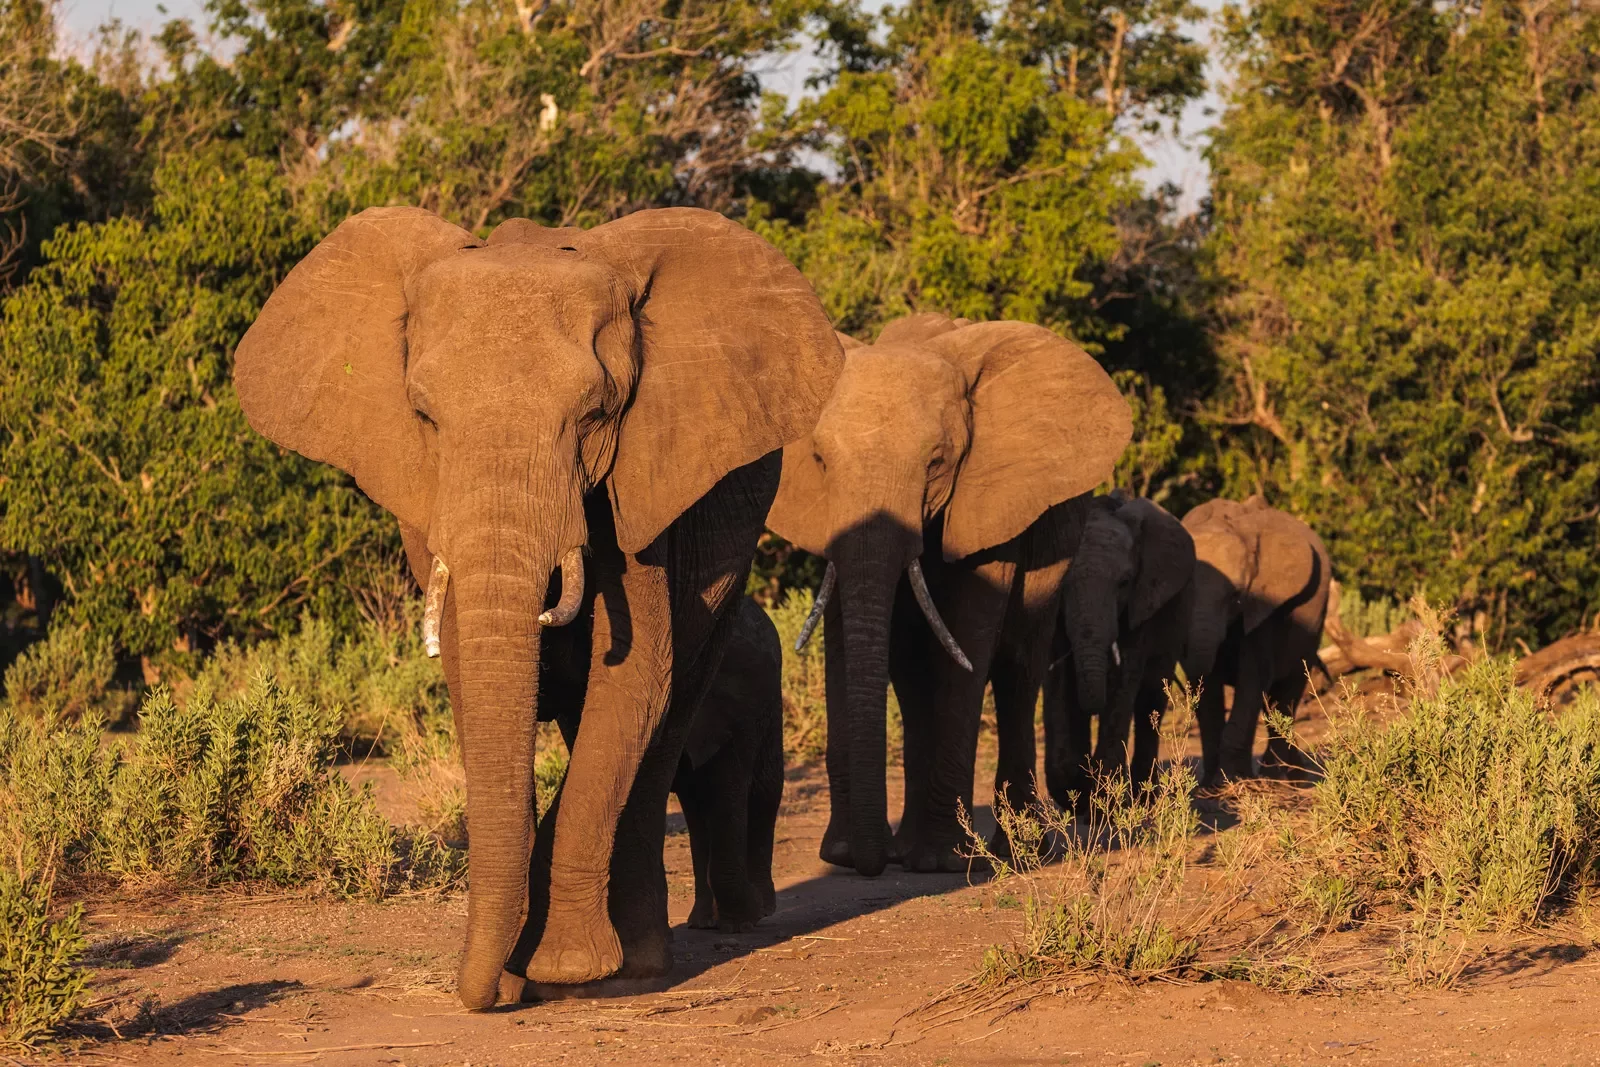 A group of elephants walk through a sunny pasture